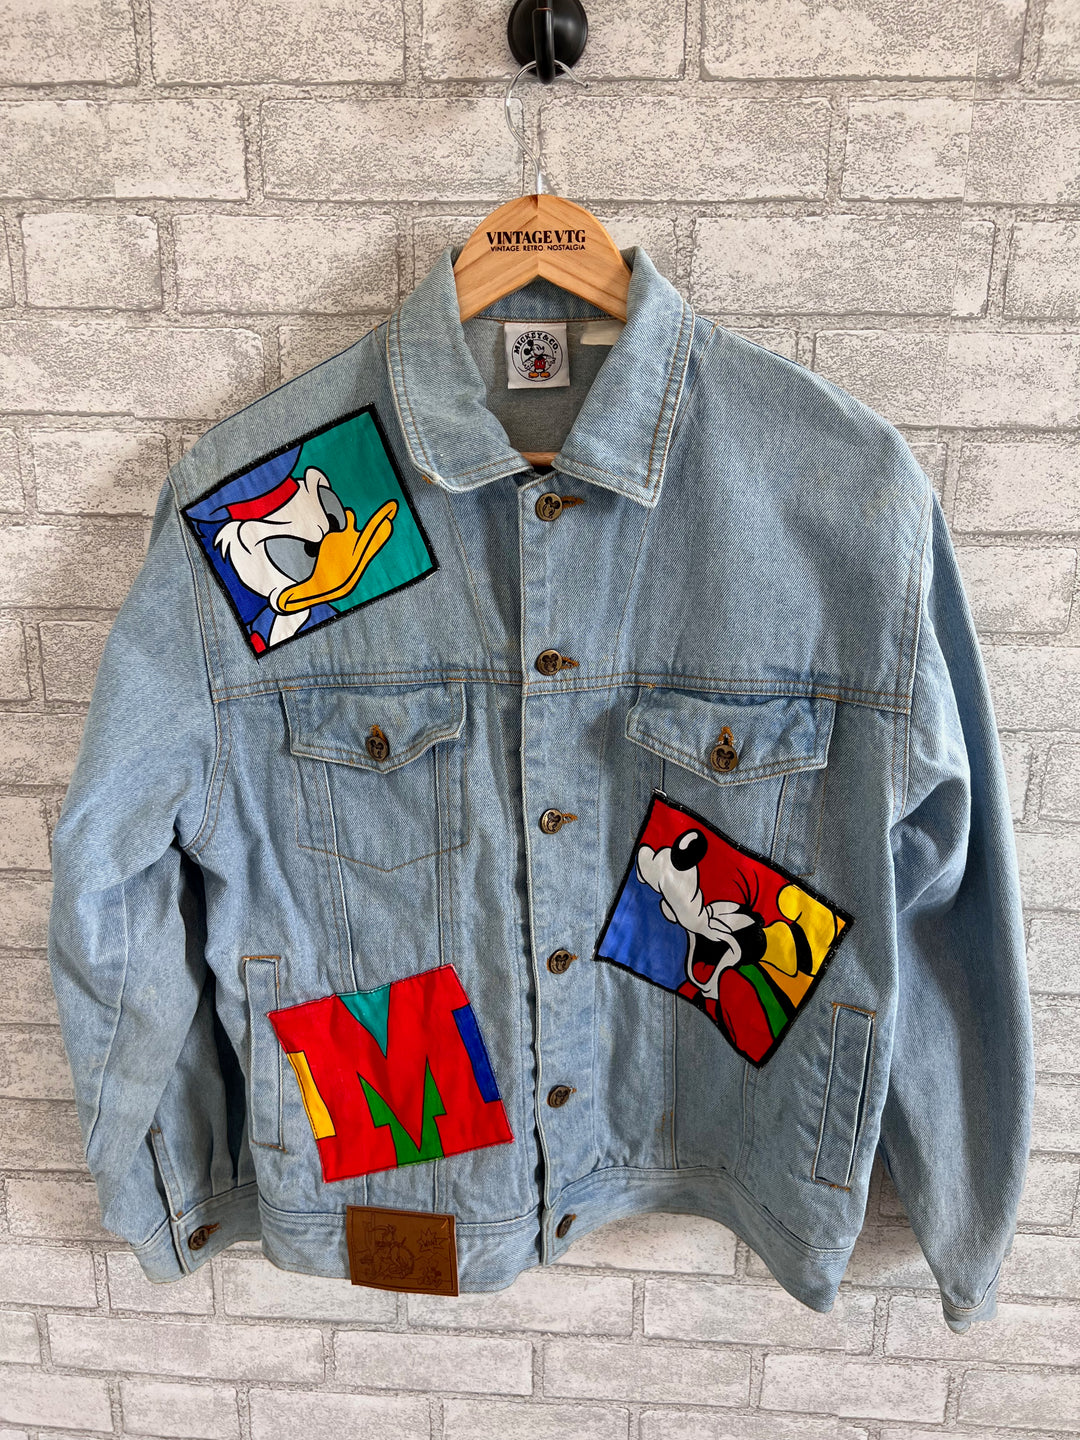 Rare vintage Mickey & Co Denim patch Jacket. Mickey, Donald and Goofy